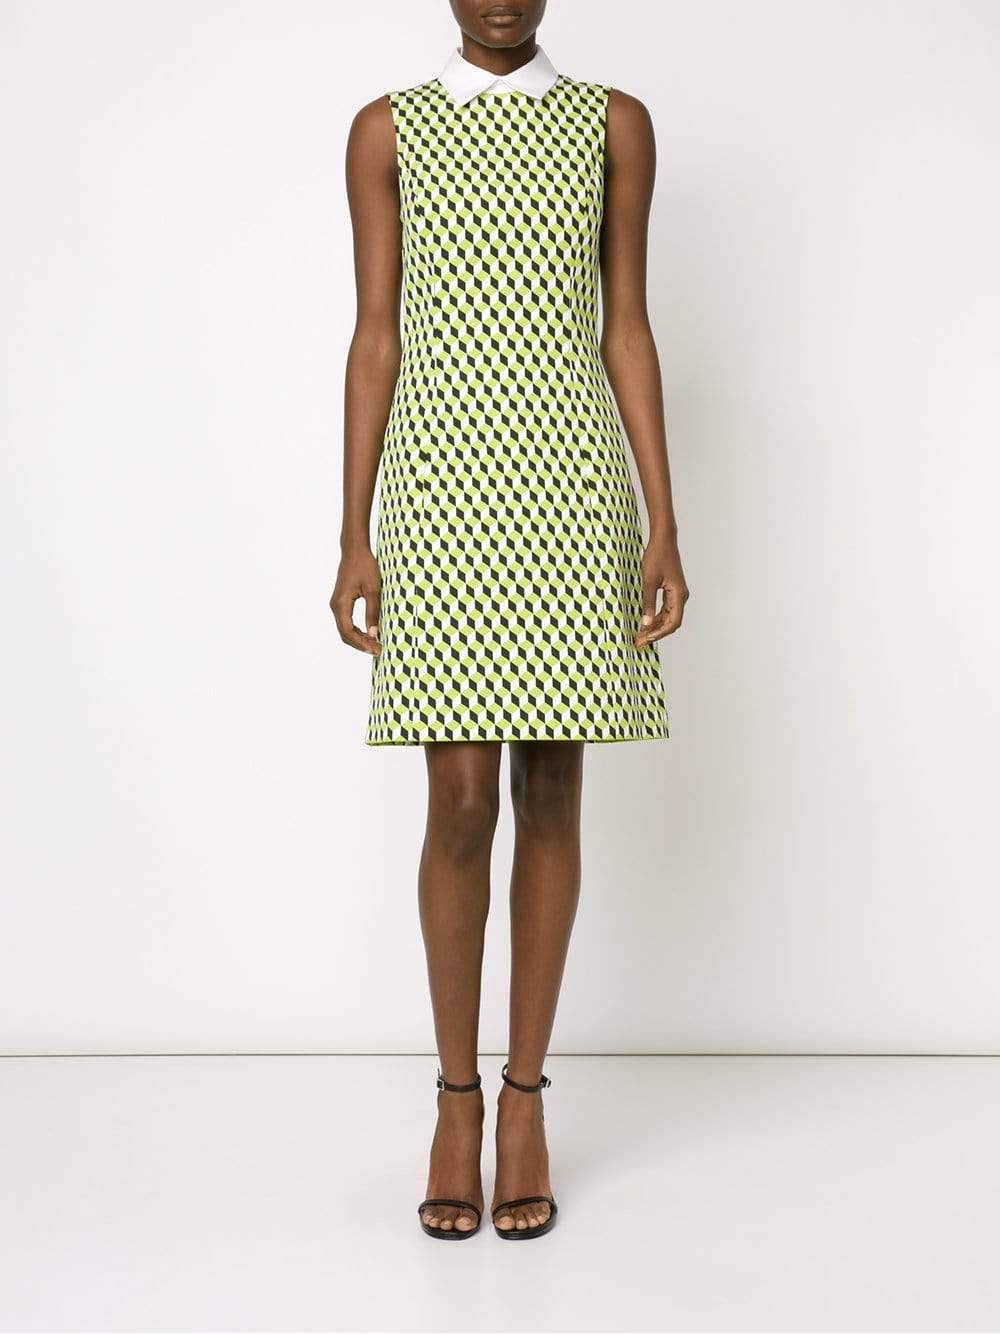 MICHAEL KORS-Cubism Collar Dress-